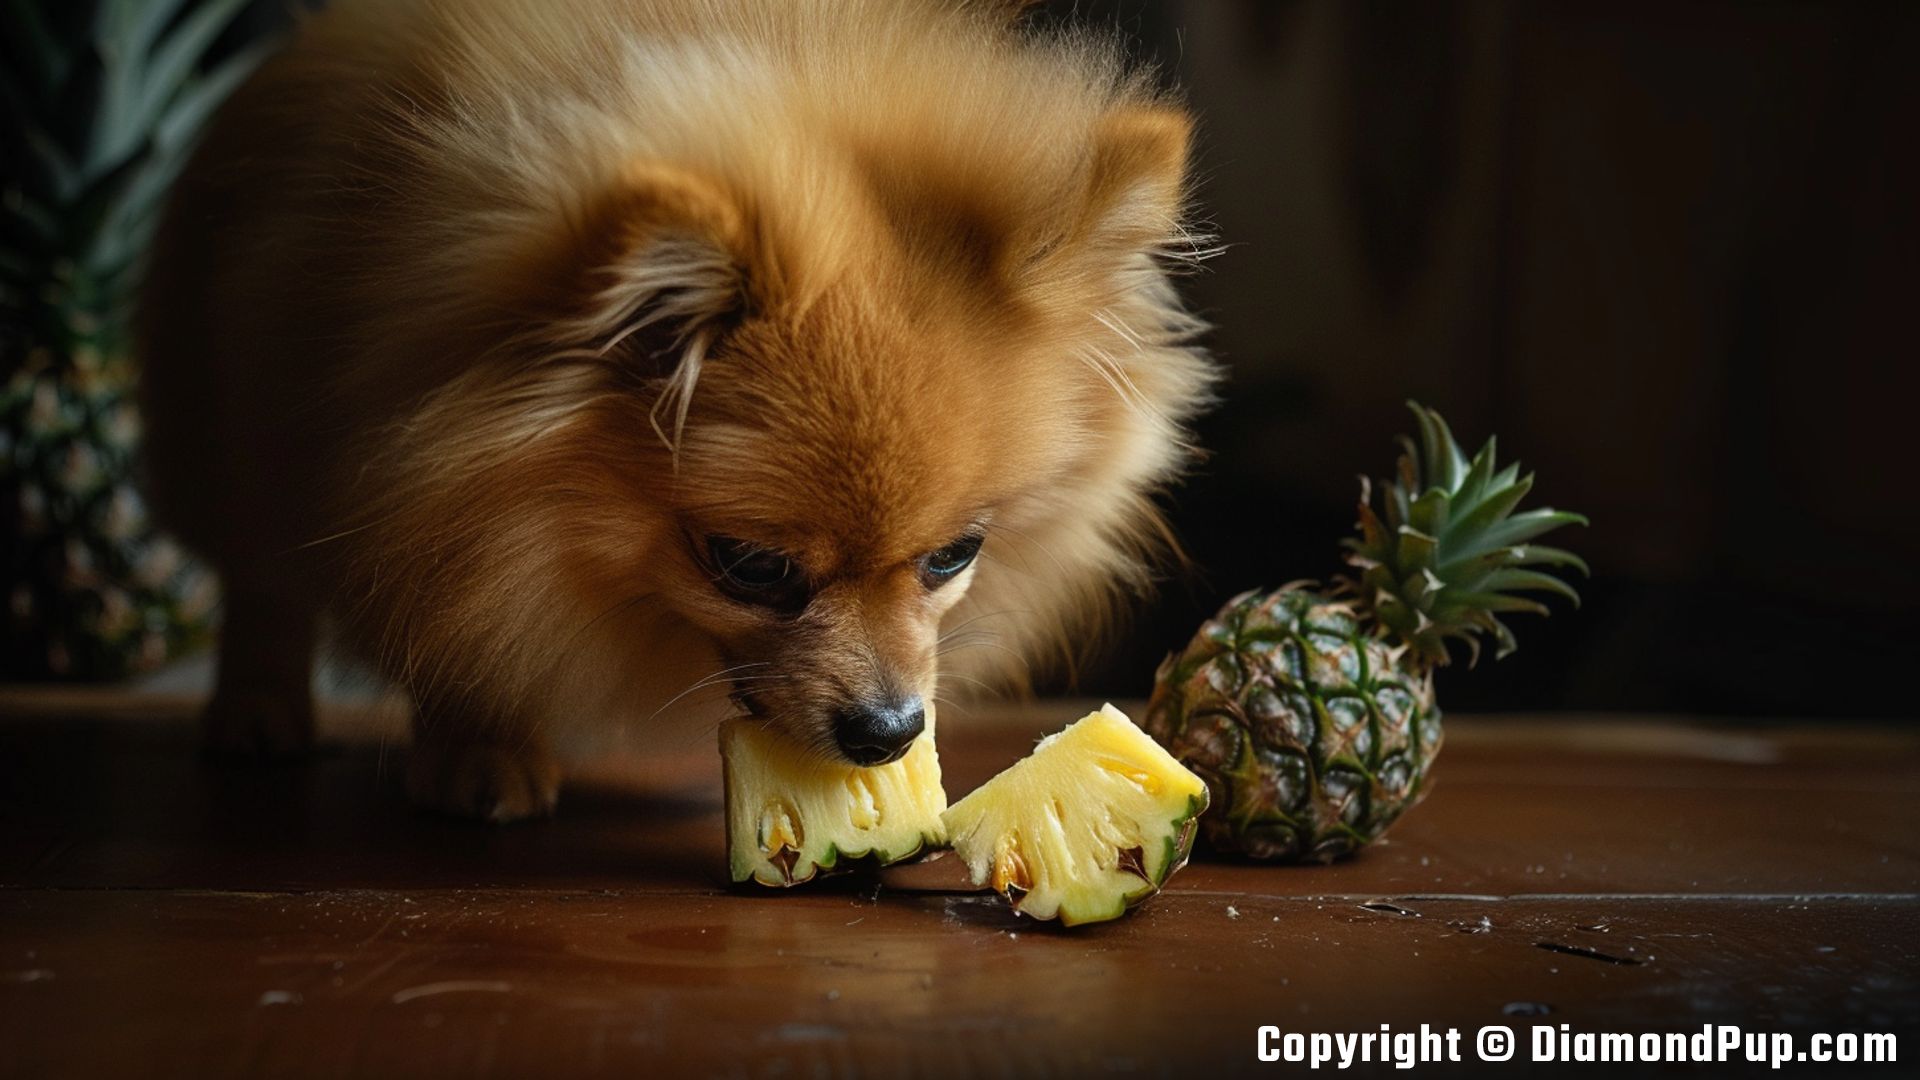 Photograph of an Adorable Pomeranian Eating Pineapple